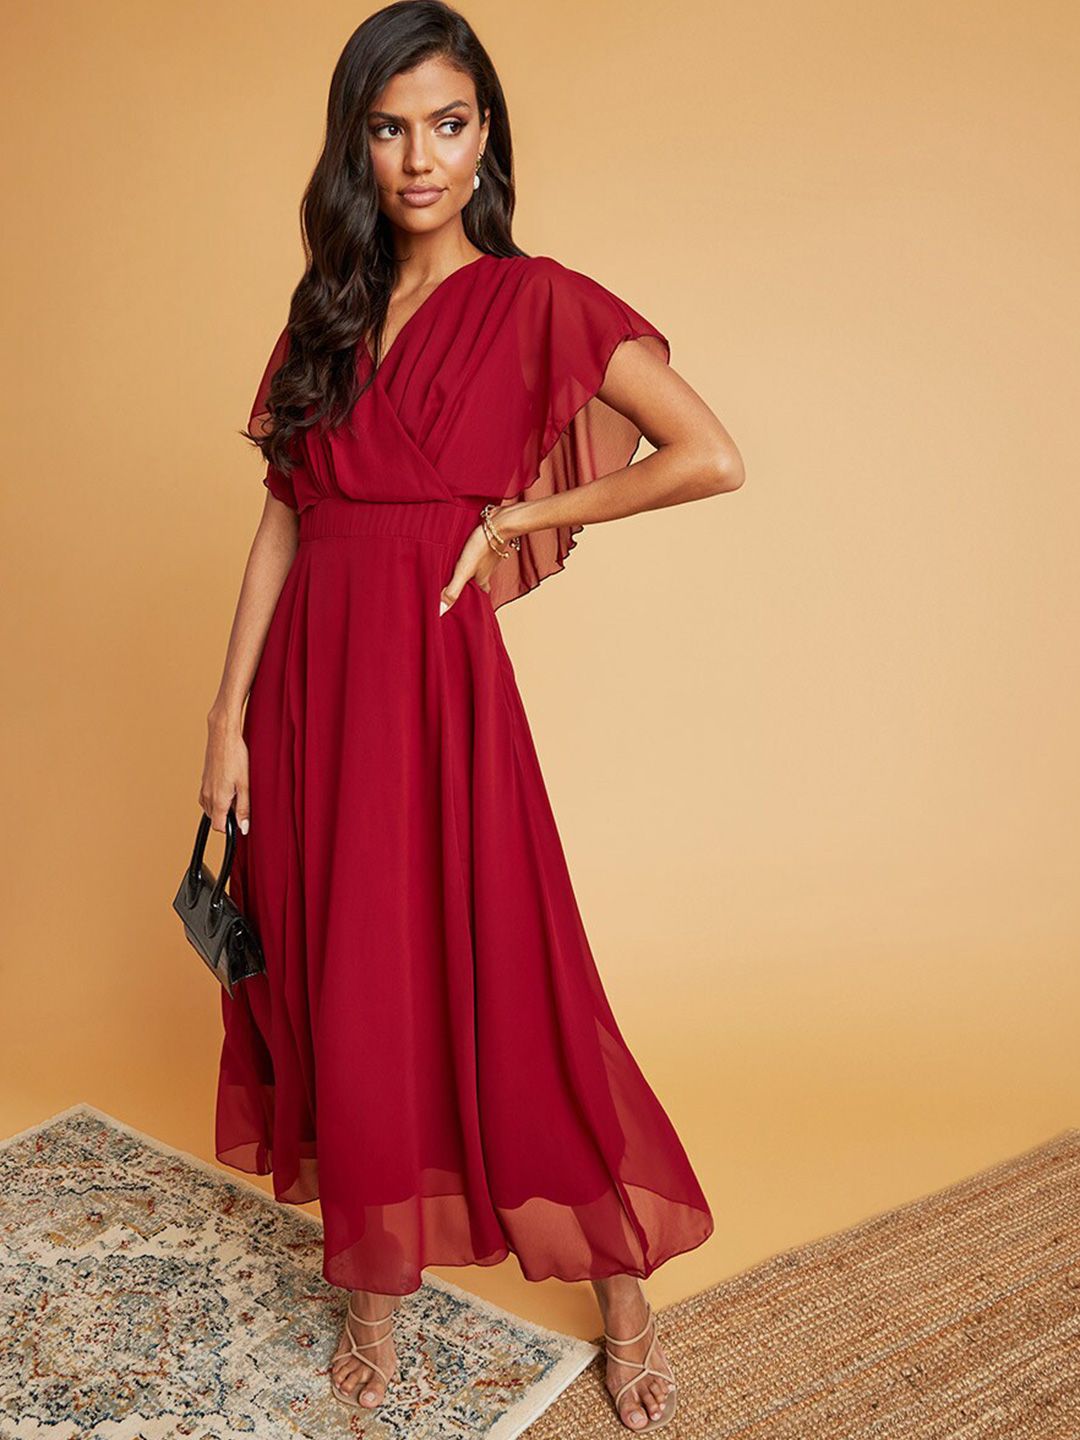 Styli Burgundy Maxi Dress Price in India